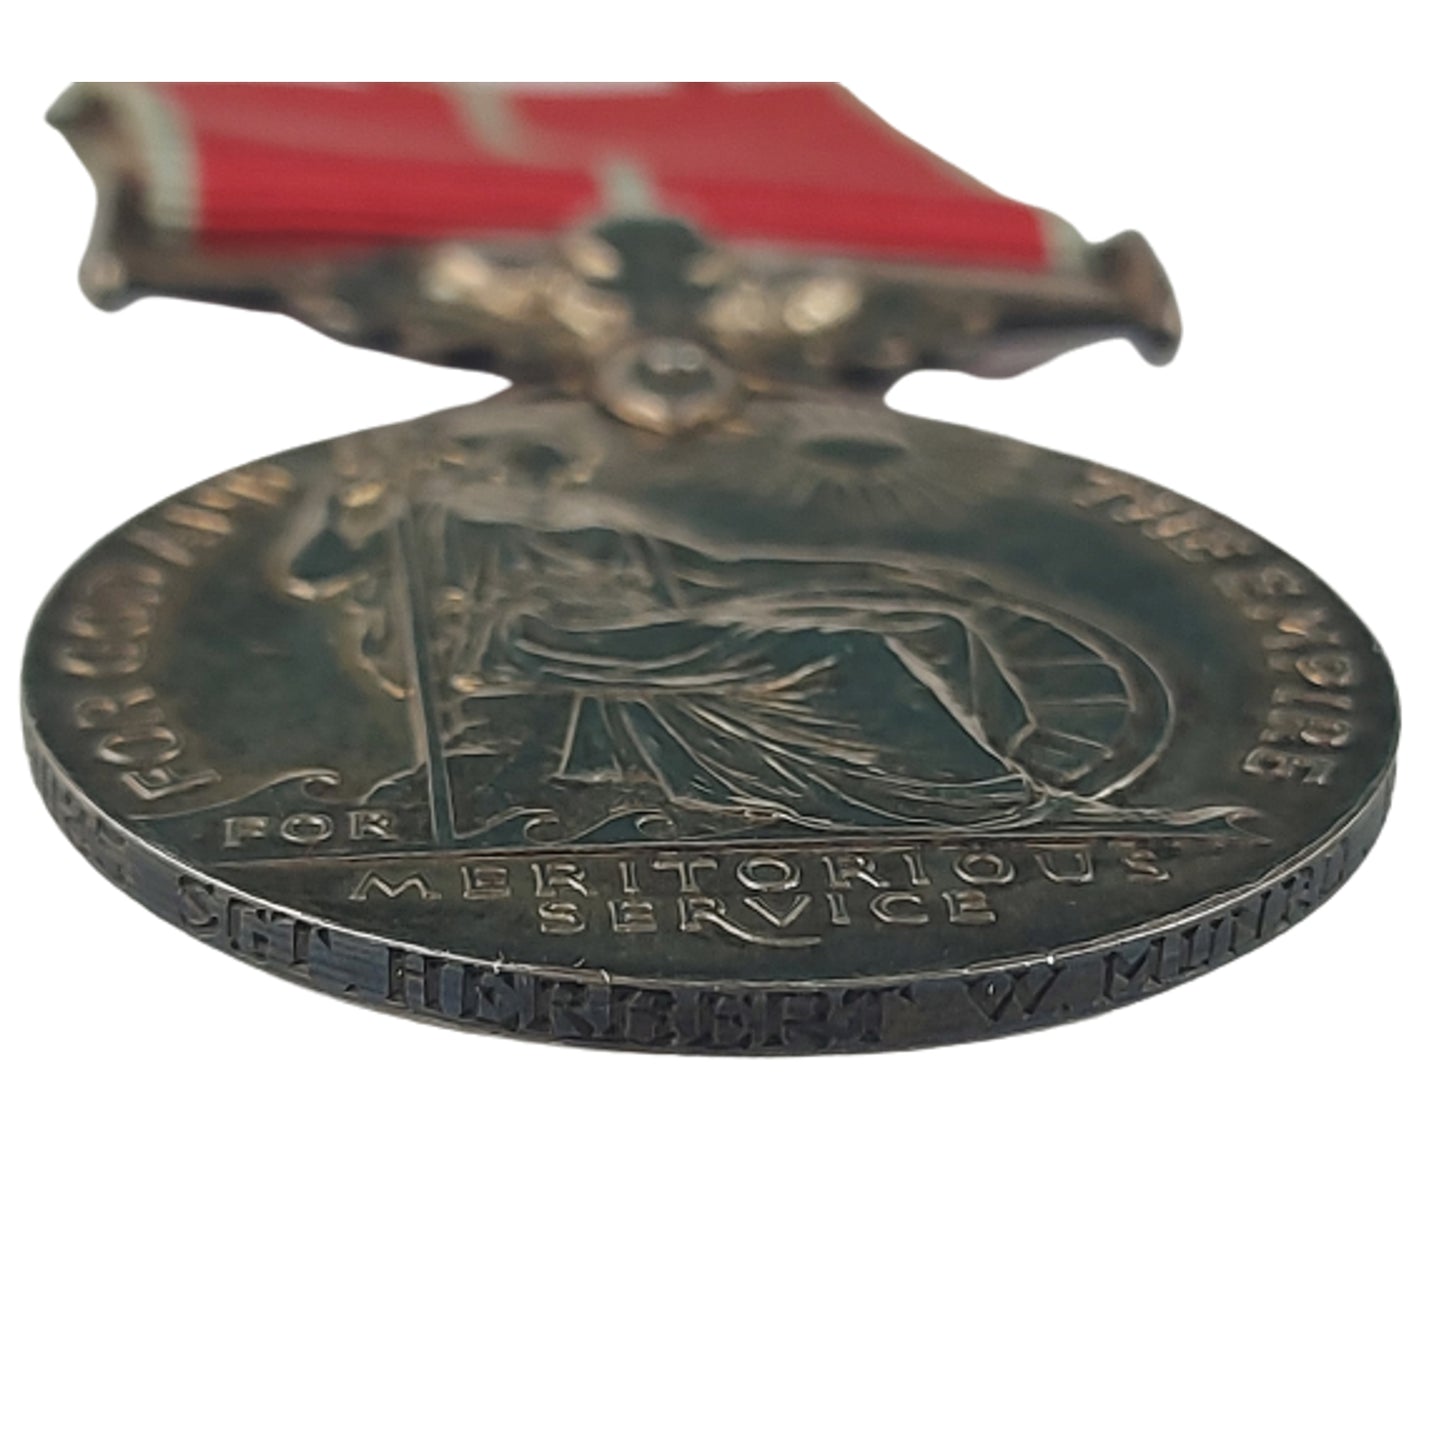 WW2 RCOC Royal Canadian Ordnance Corps MSM Medal Set